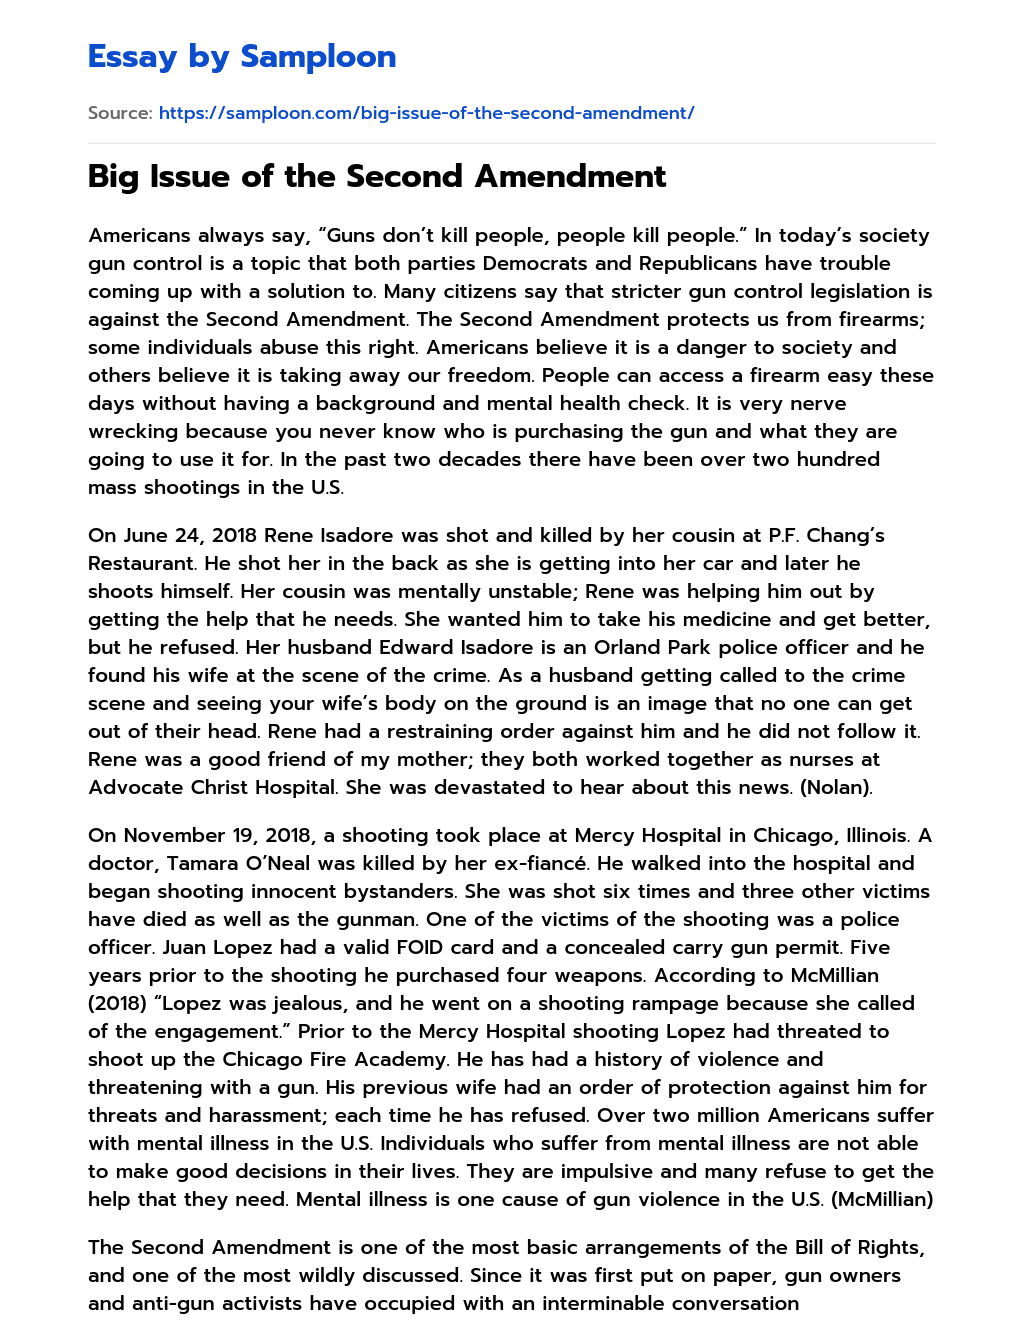 essay on second amendment rights